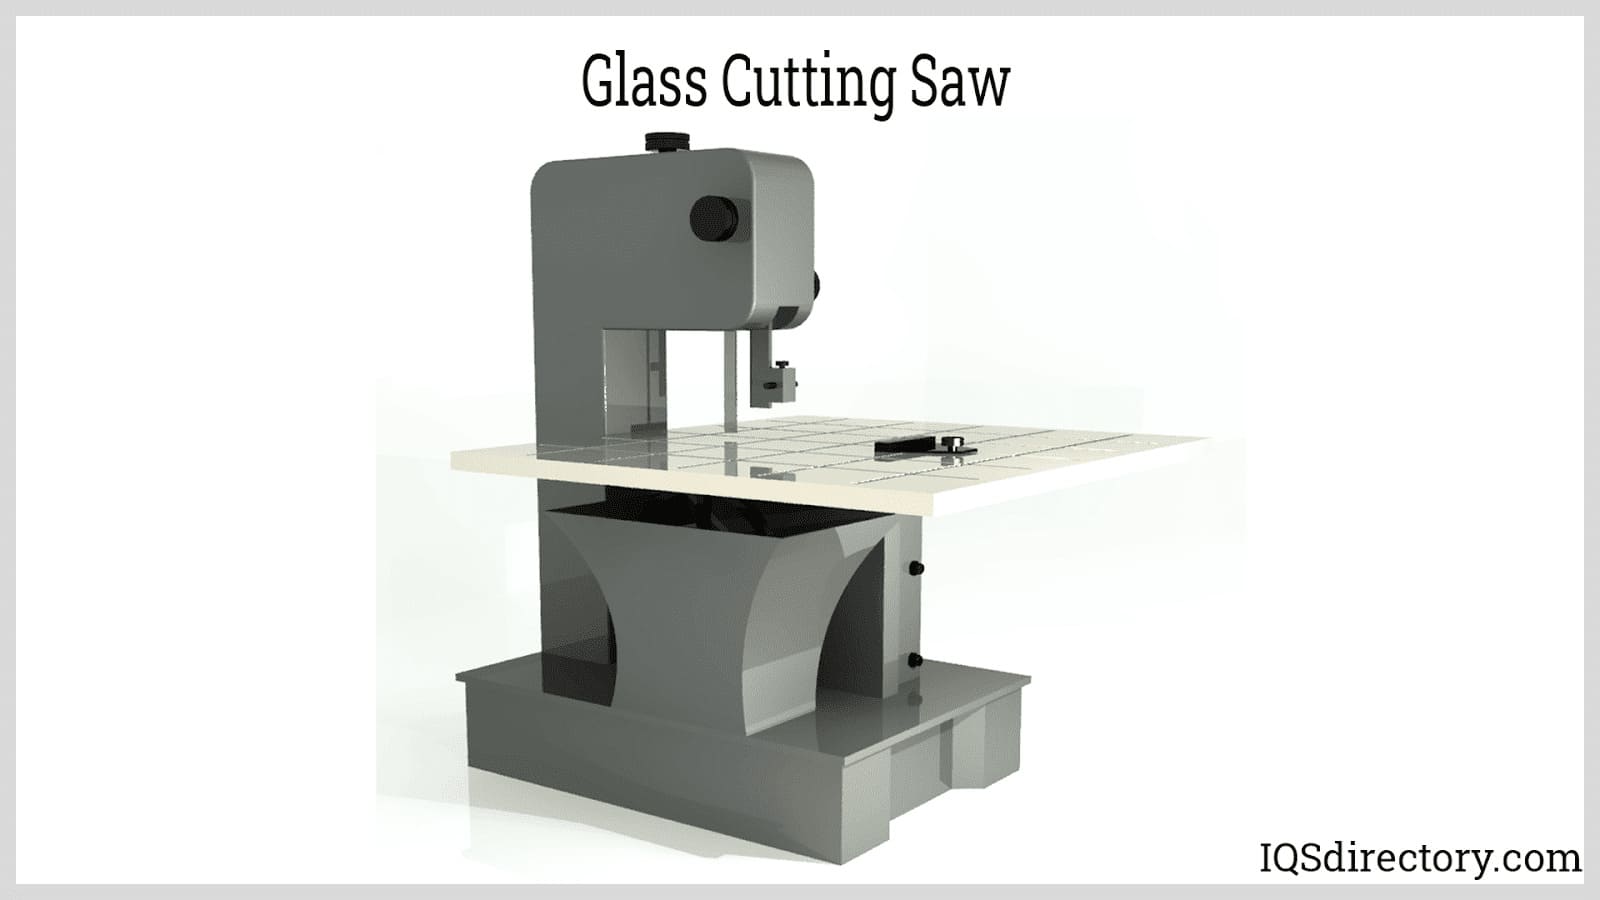 Glass Cutting Saw